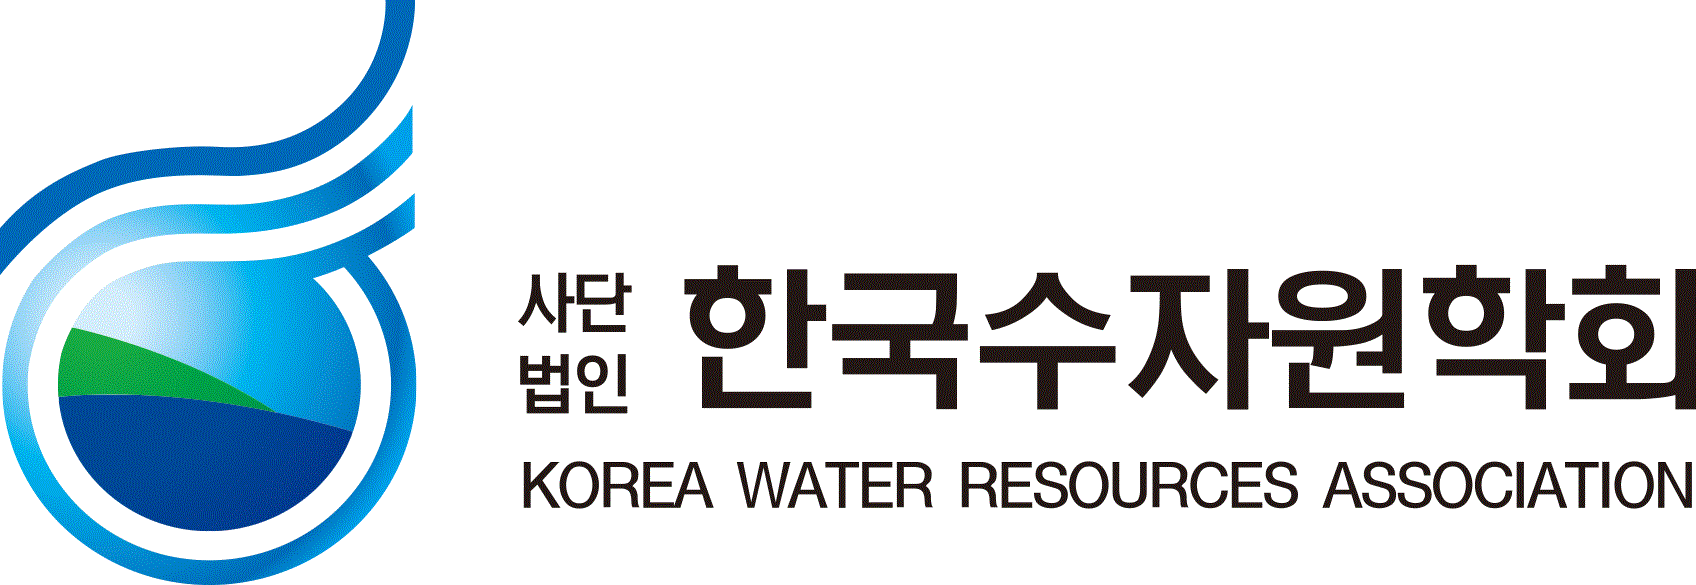 Korea Water Resources Association